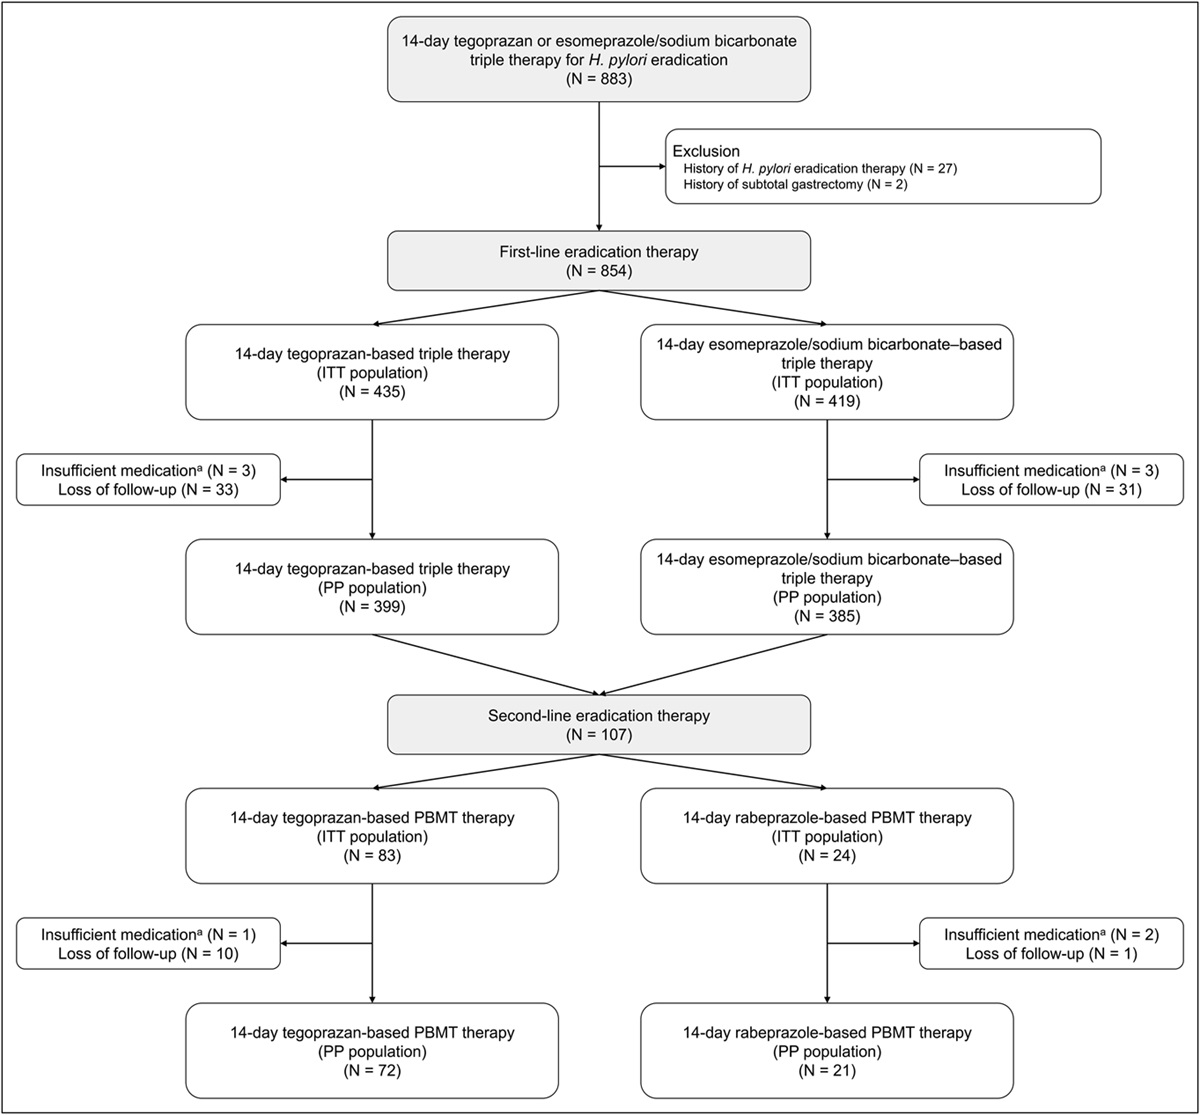 Comparative Efficacy of Tegoprazan vs Esomeprazole/Sodium Bicarbonate for the Treatment of Helicobacter pylori Infection